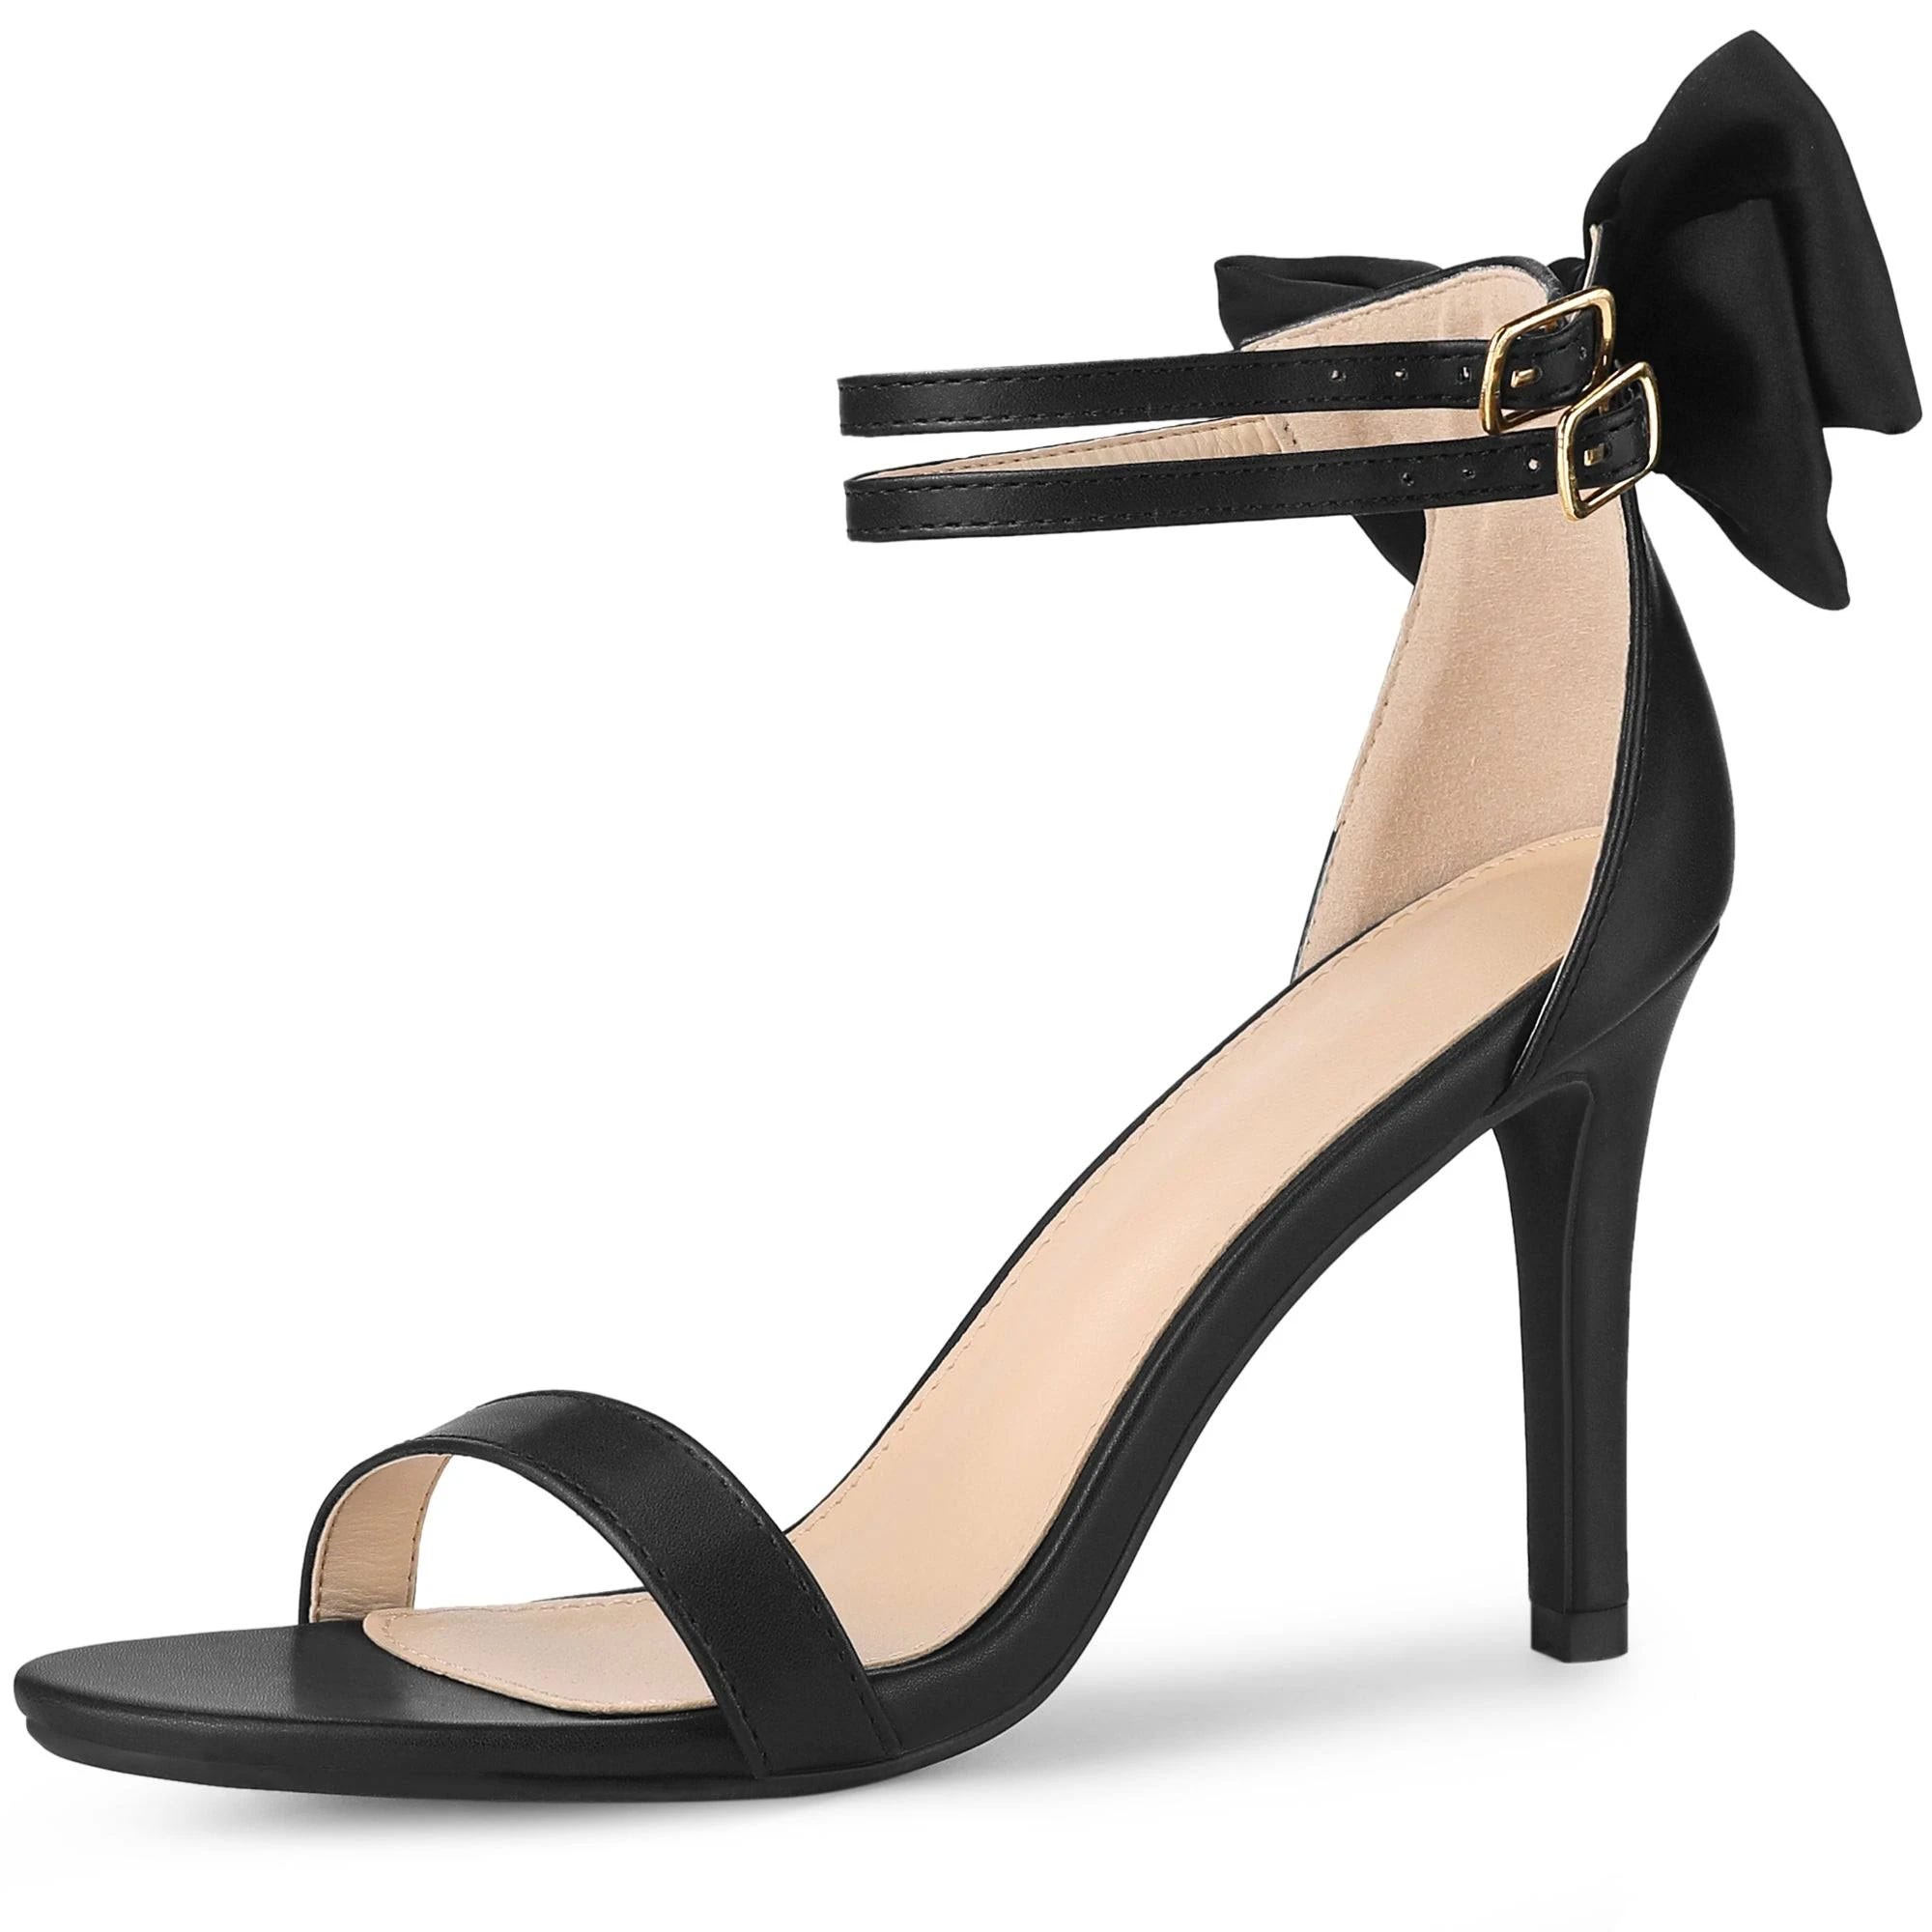 Elegant Bow Back Black Heel Sandals with Faux Leather Vamp | Image